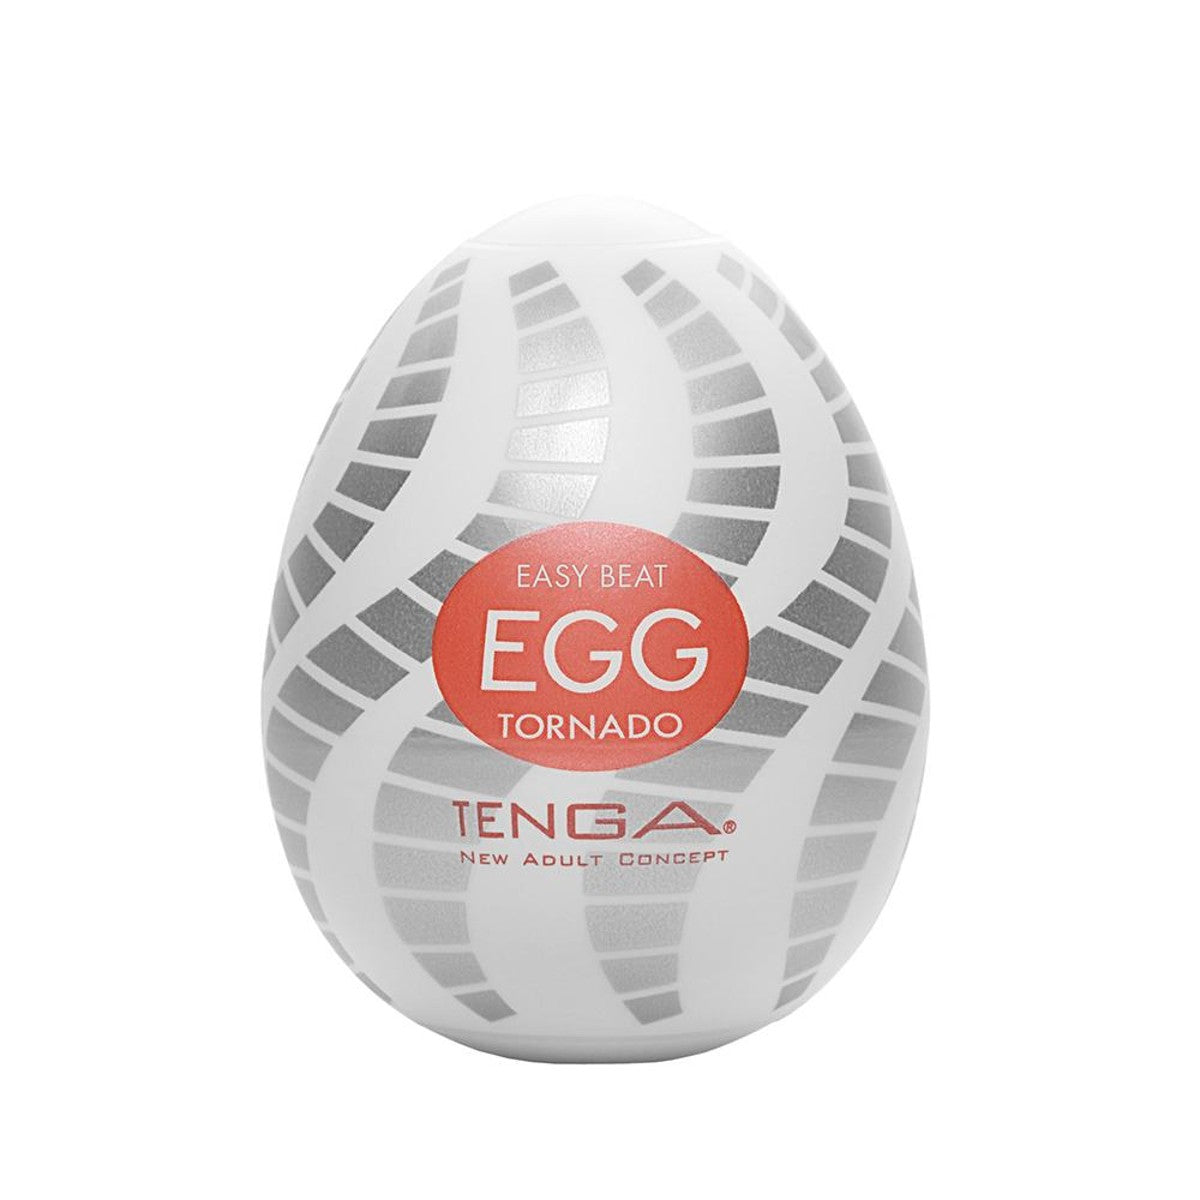 Tenga New Egg Sleeve Orange Tornado